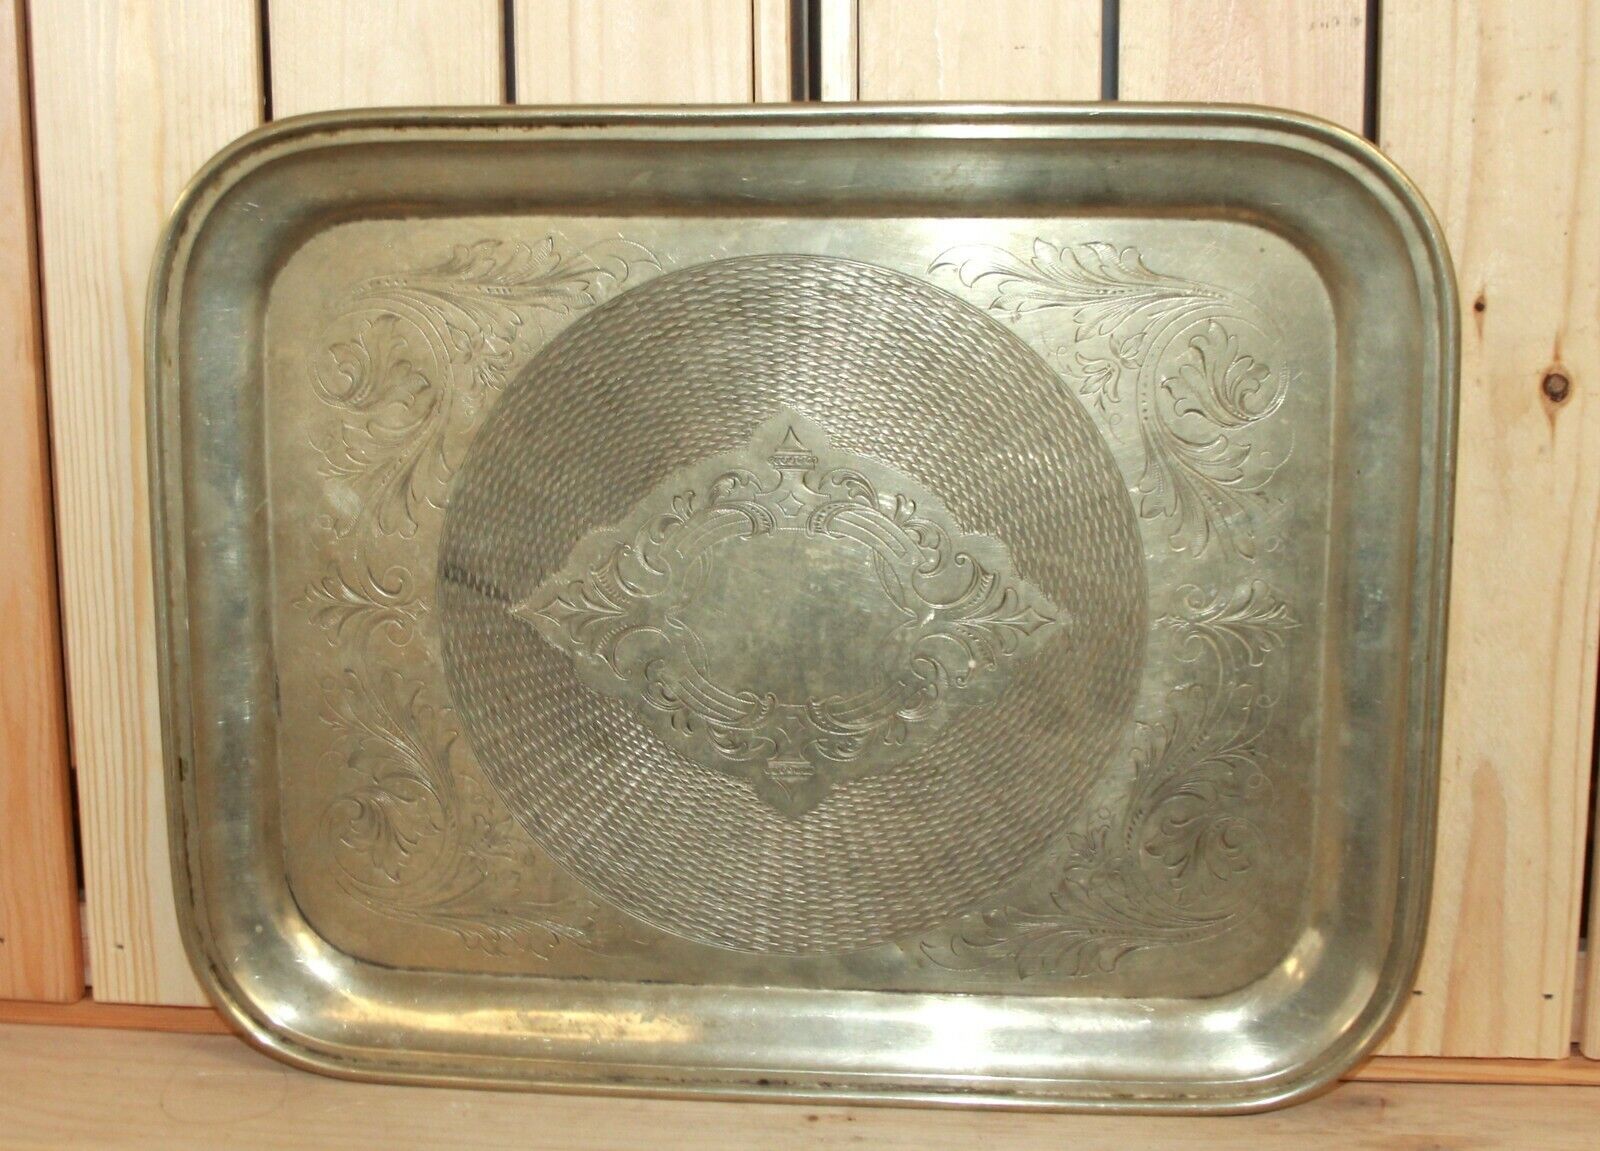 Antique metal floral engraved serving tray